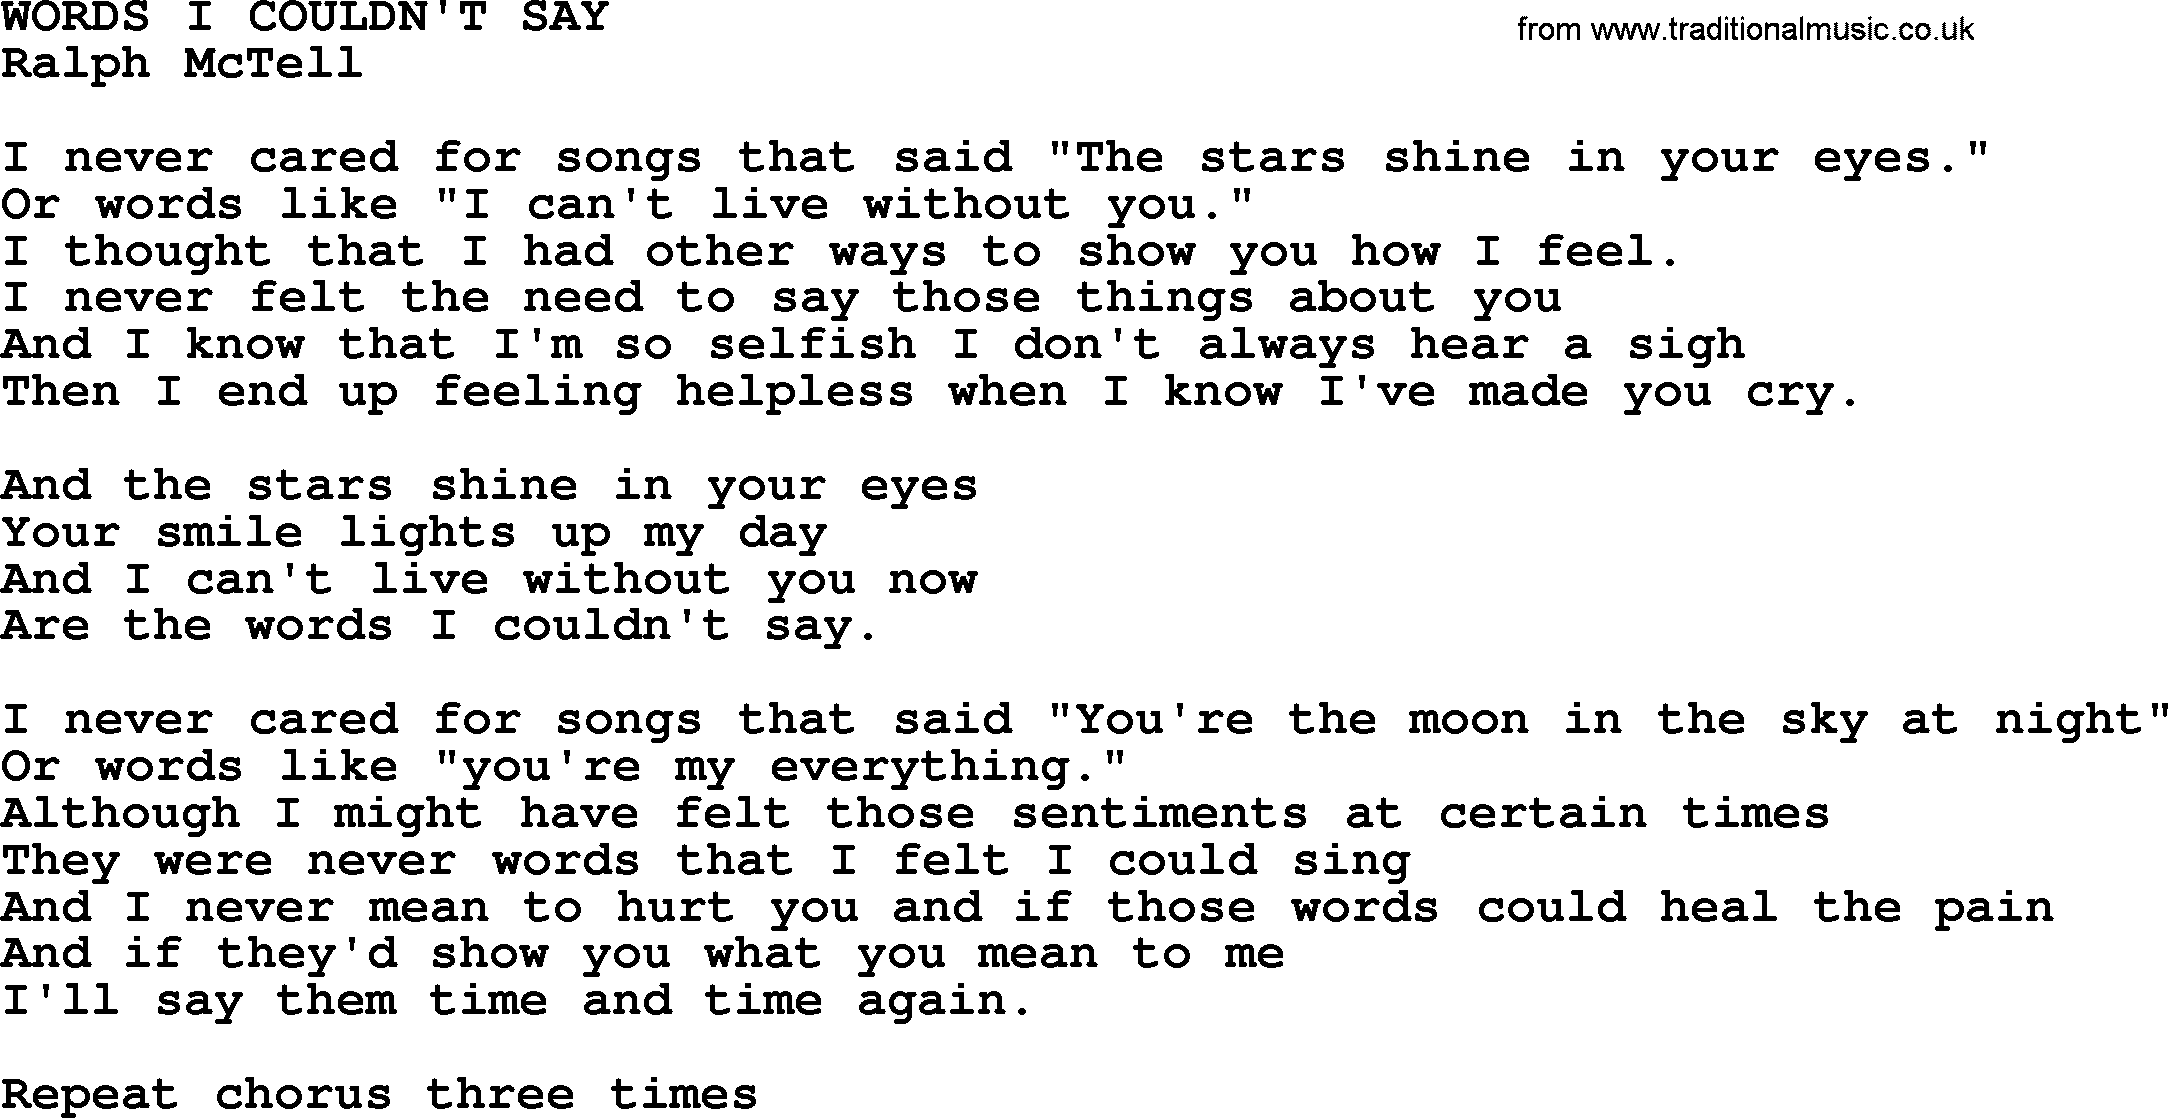 Ralph McTell Song: Words I Couldn't Say, lyrics